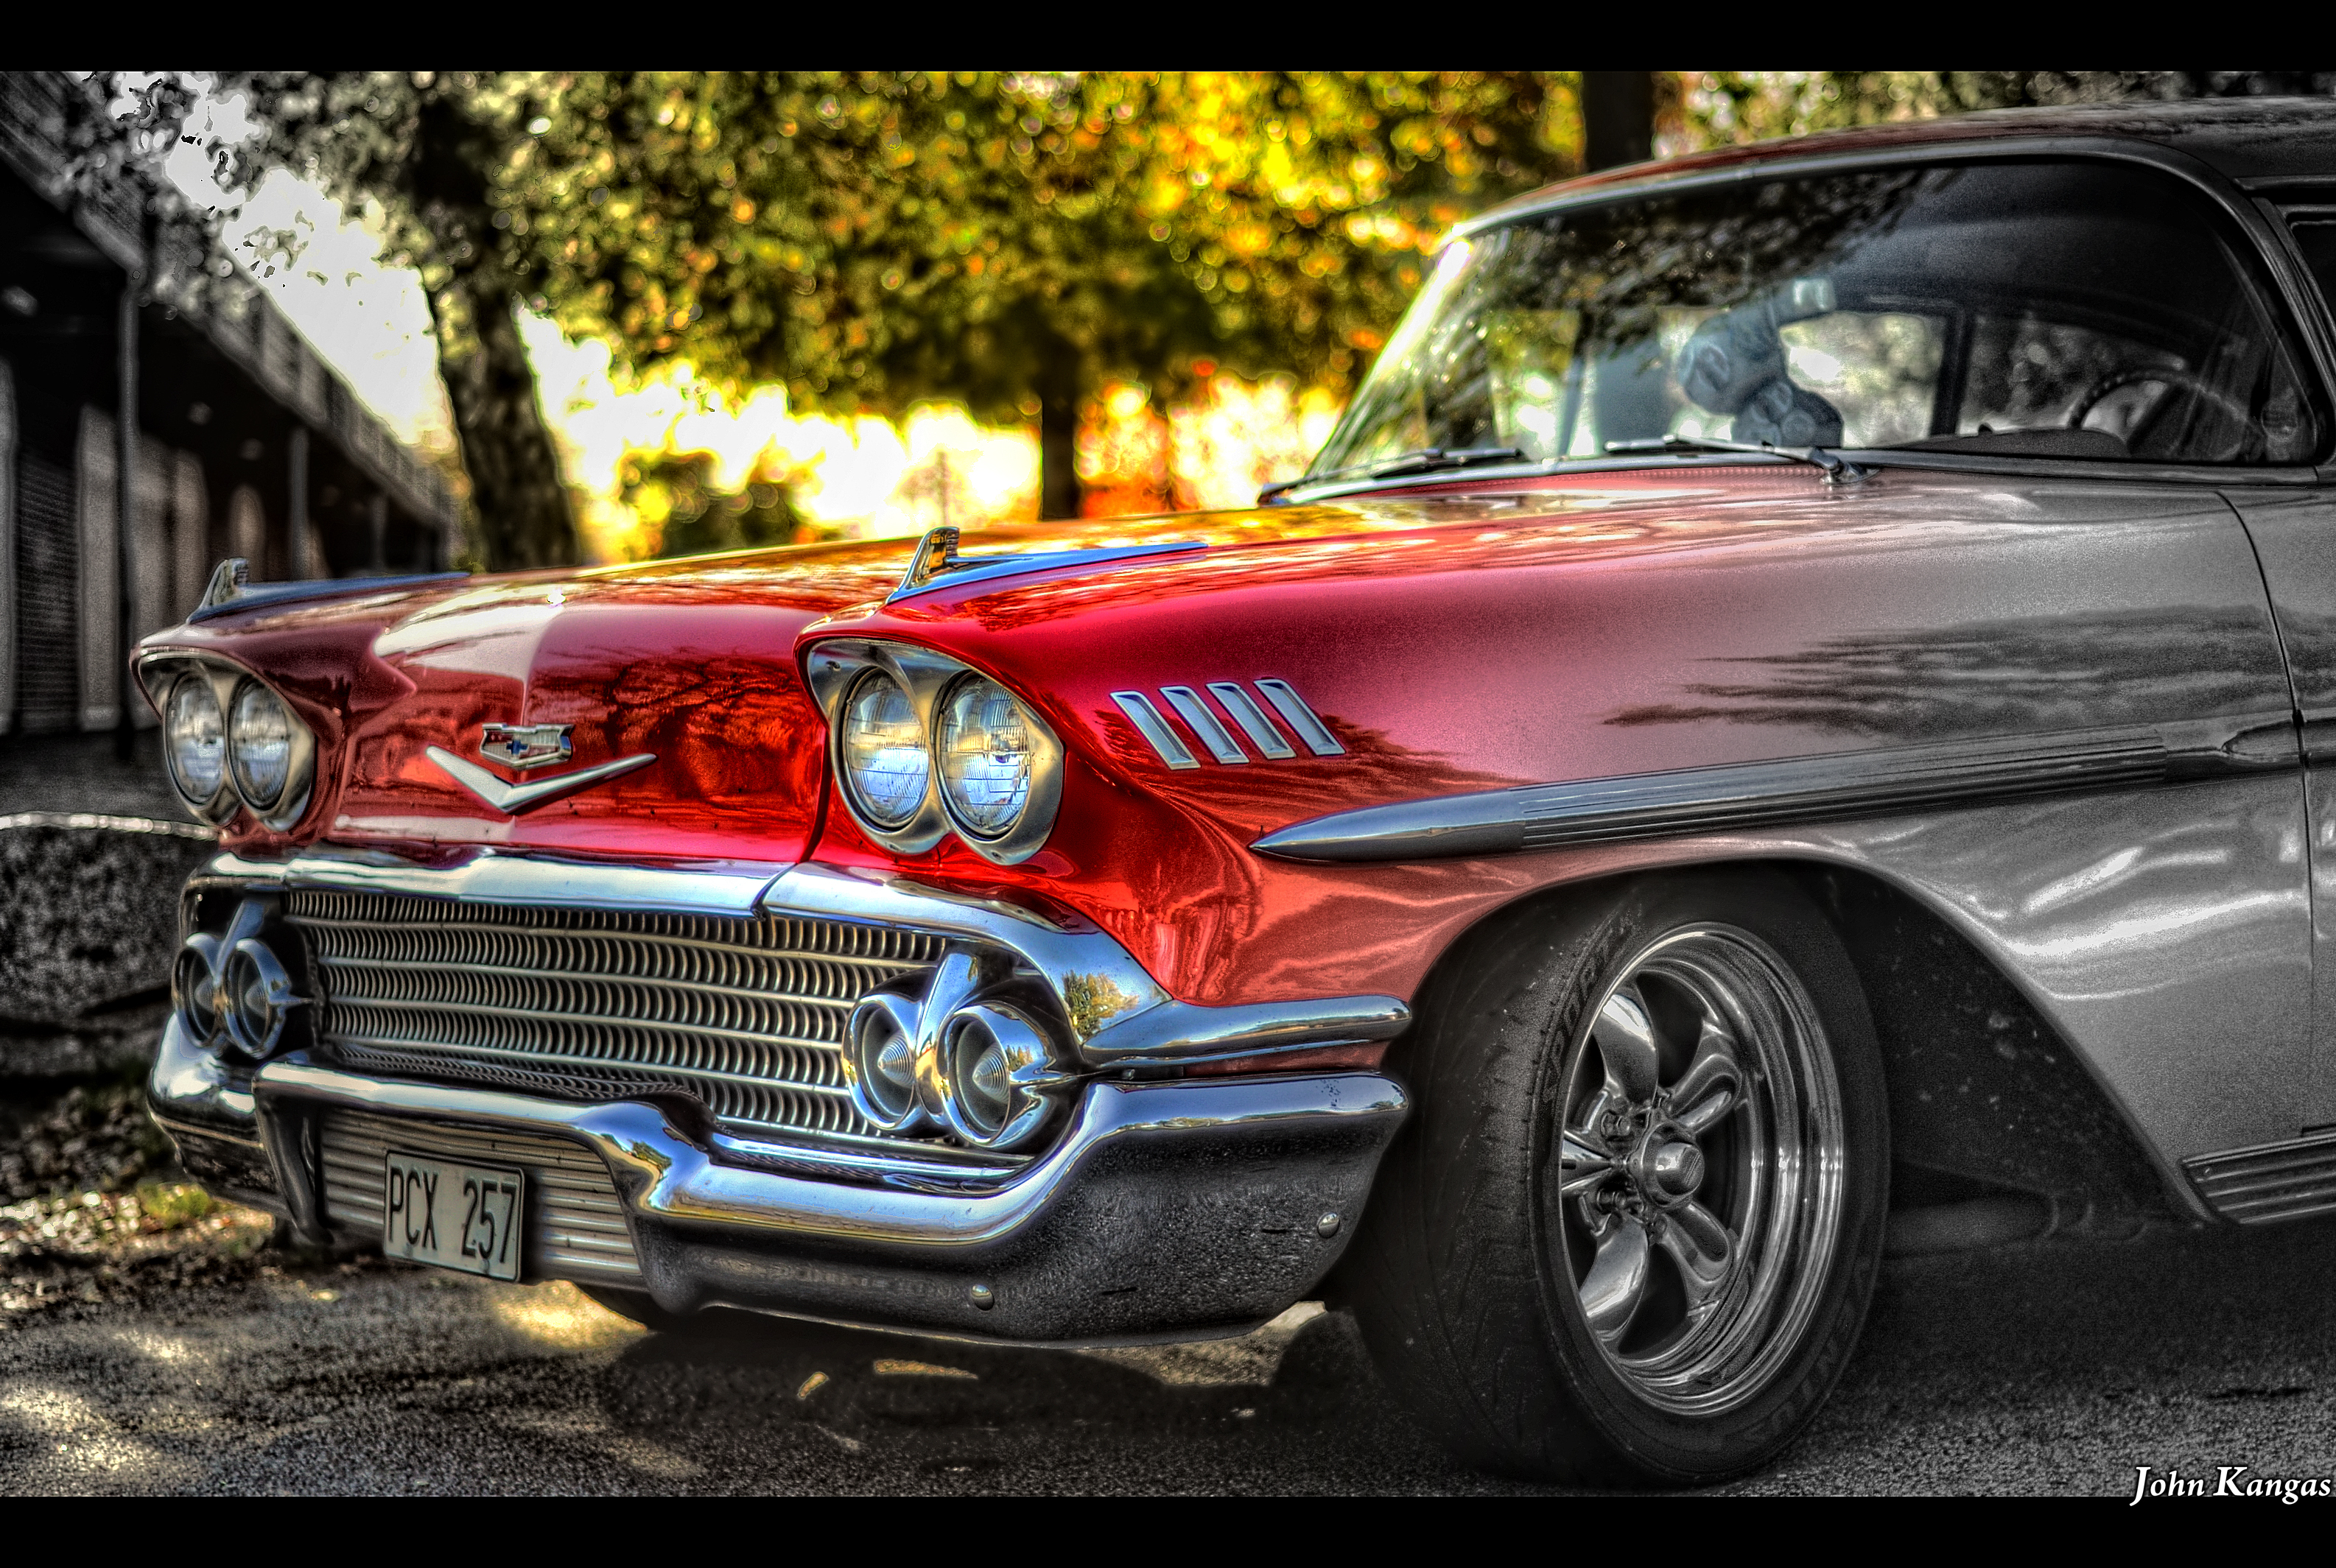 1957 Chevrolet Impala HDR | Flickr - Photo Sharing!